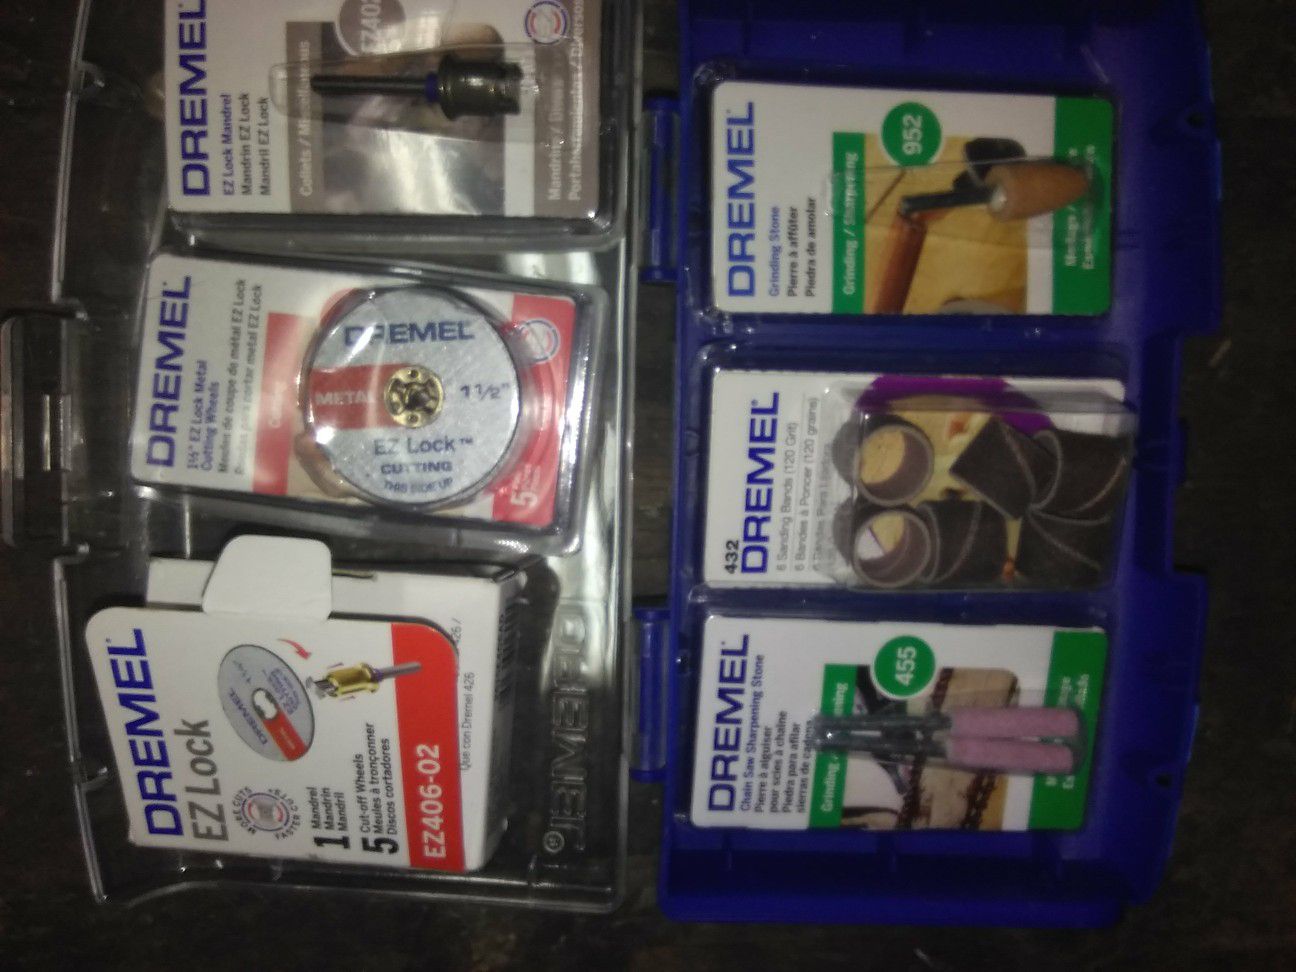 Assorted Dremel EZ-Lock kits and Sanding, Grinding attachements